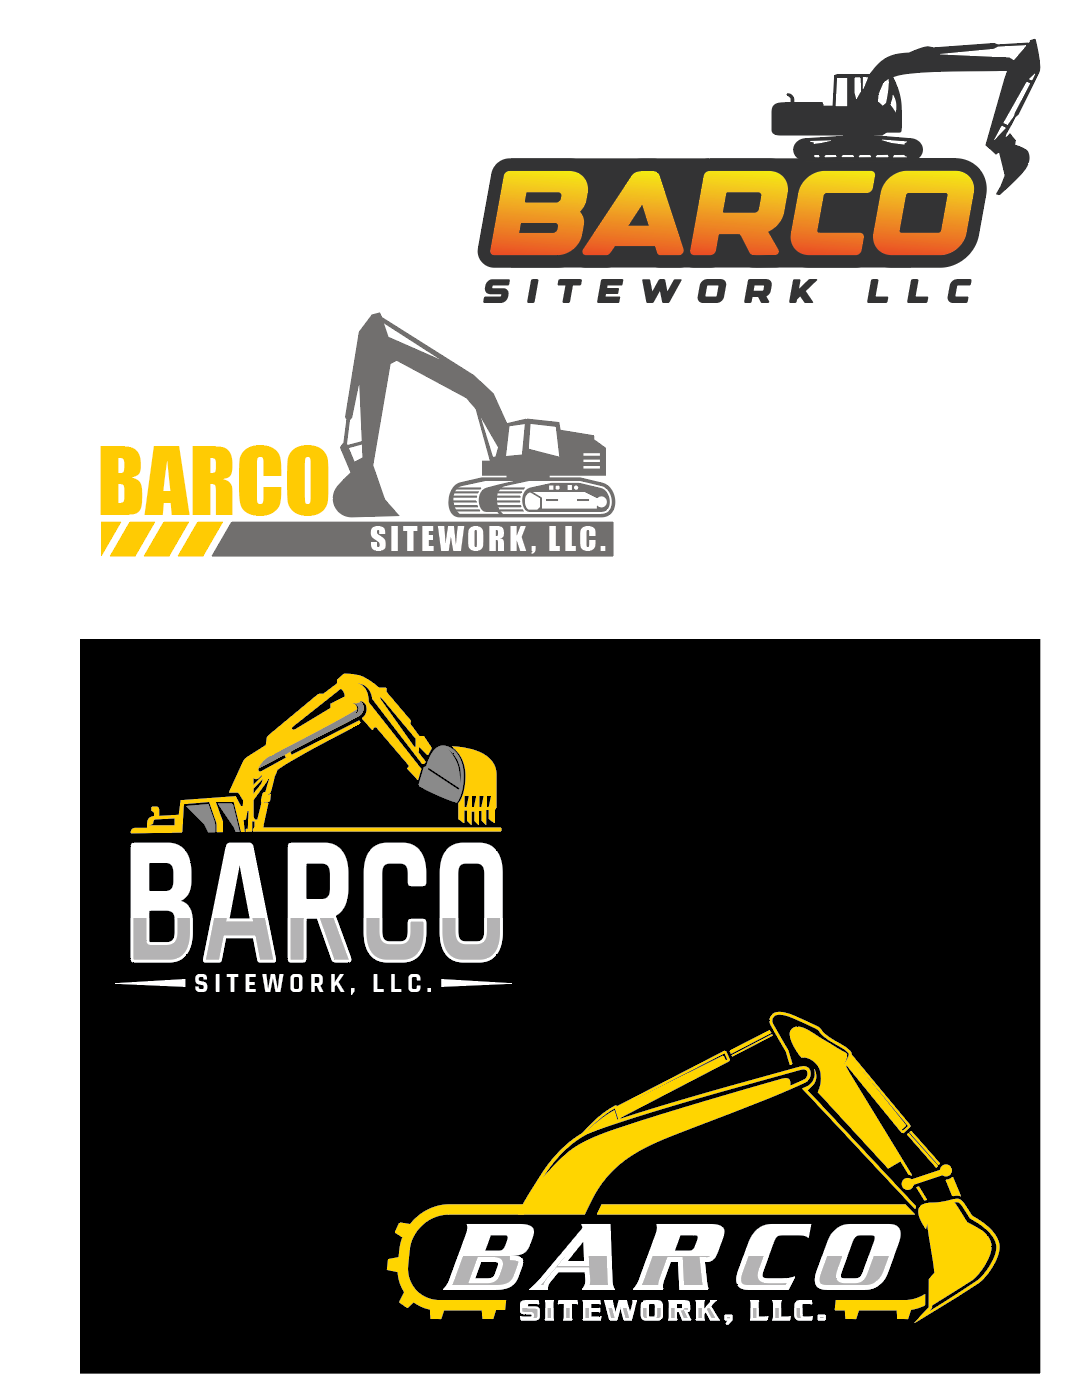 Barco Sitework LLC logo concepts